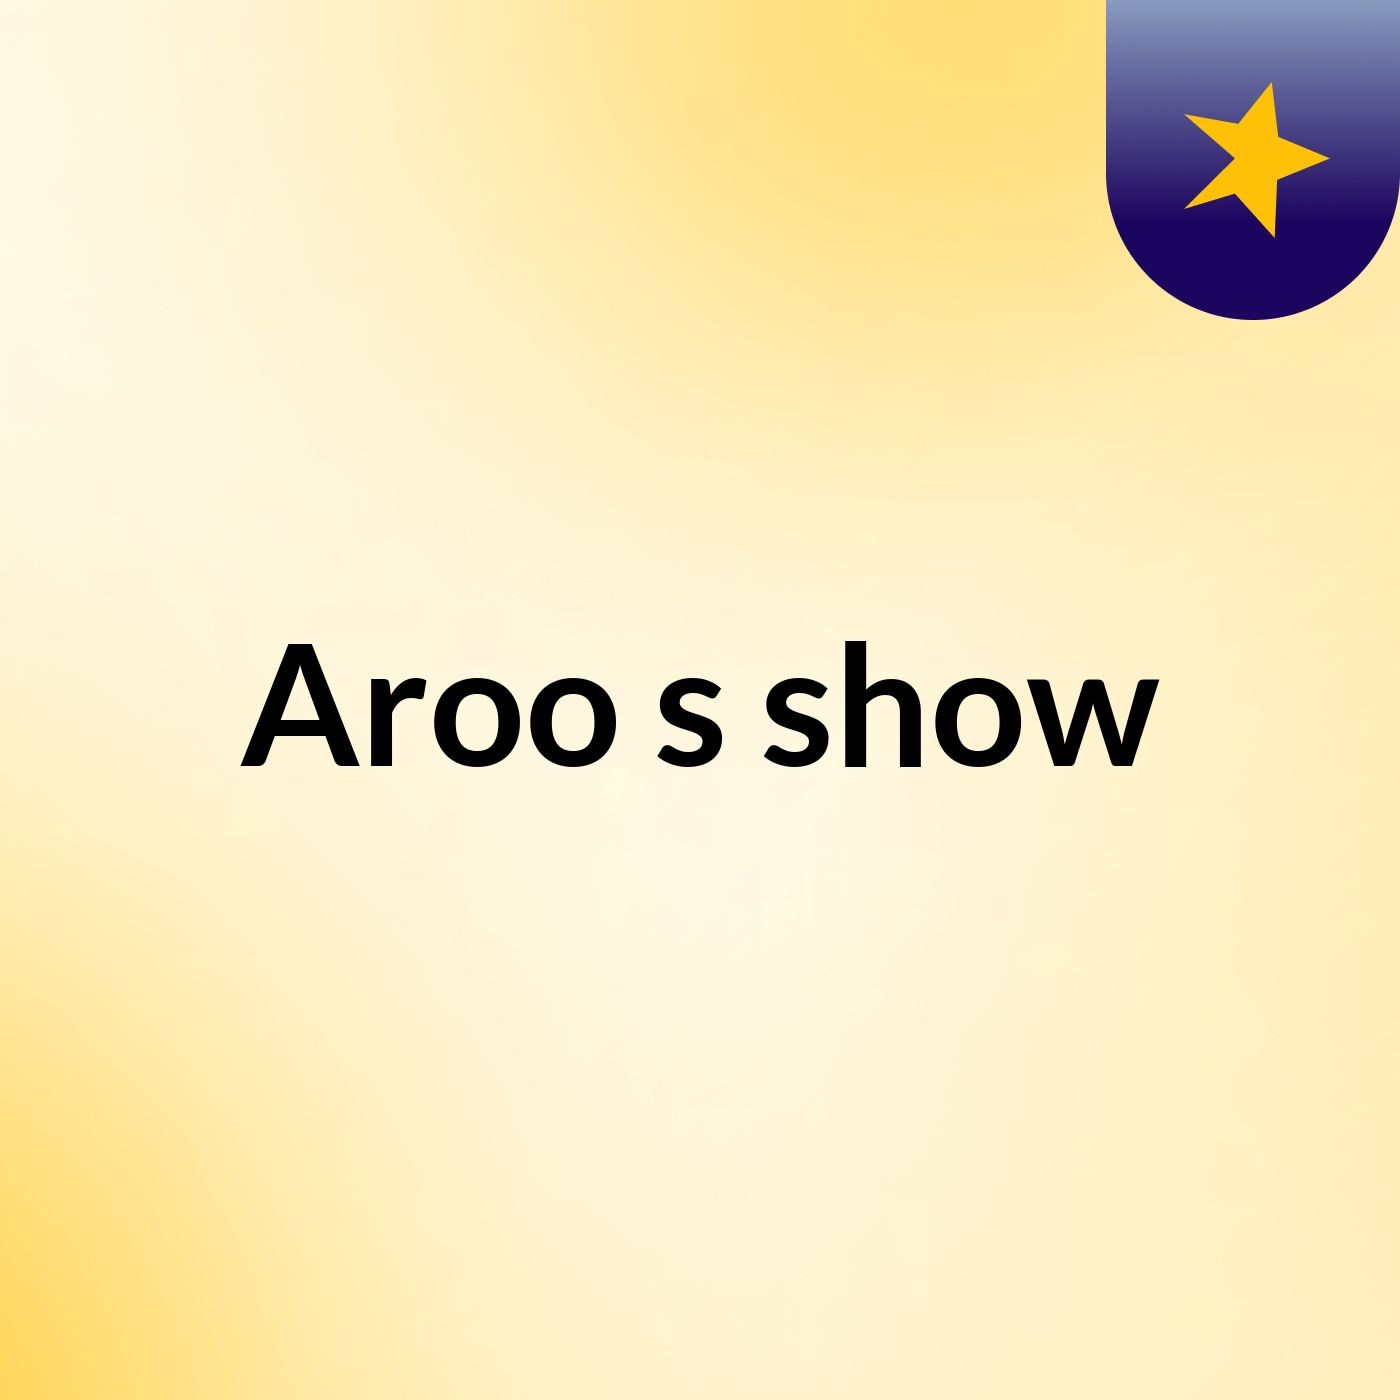 Aroo's show